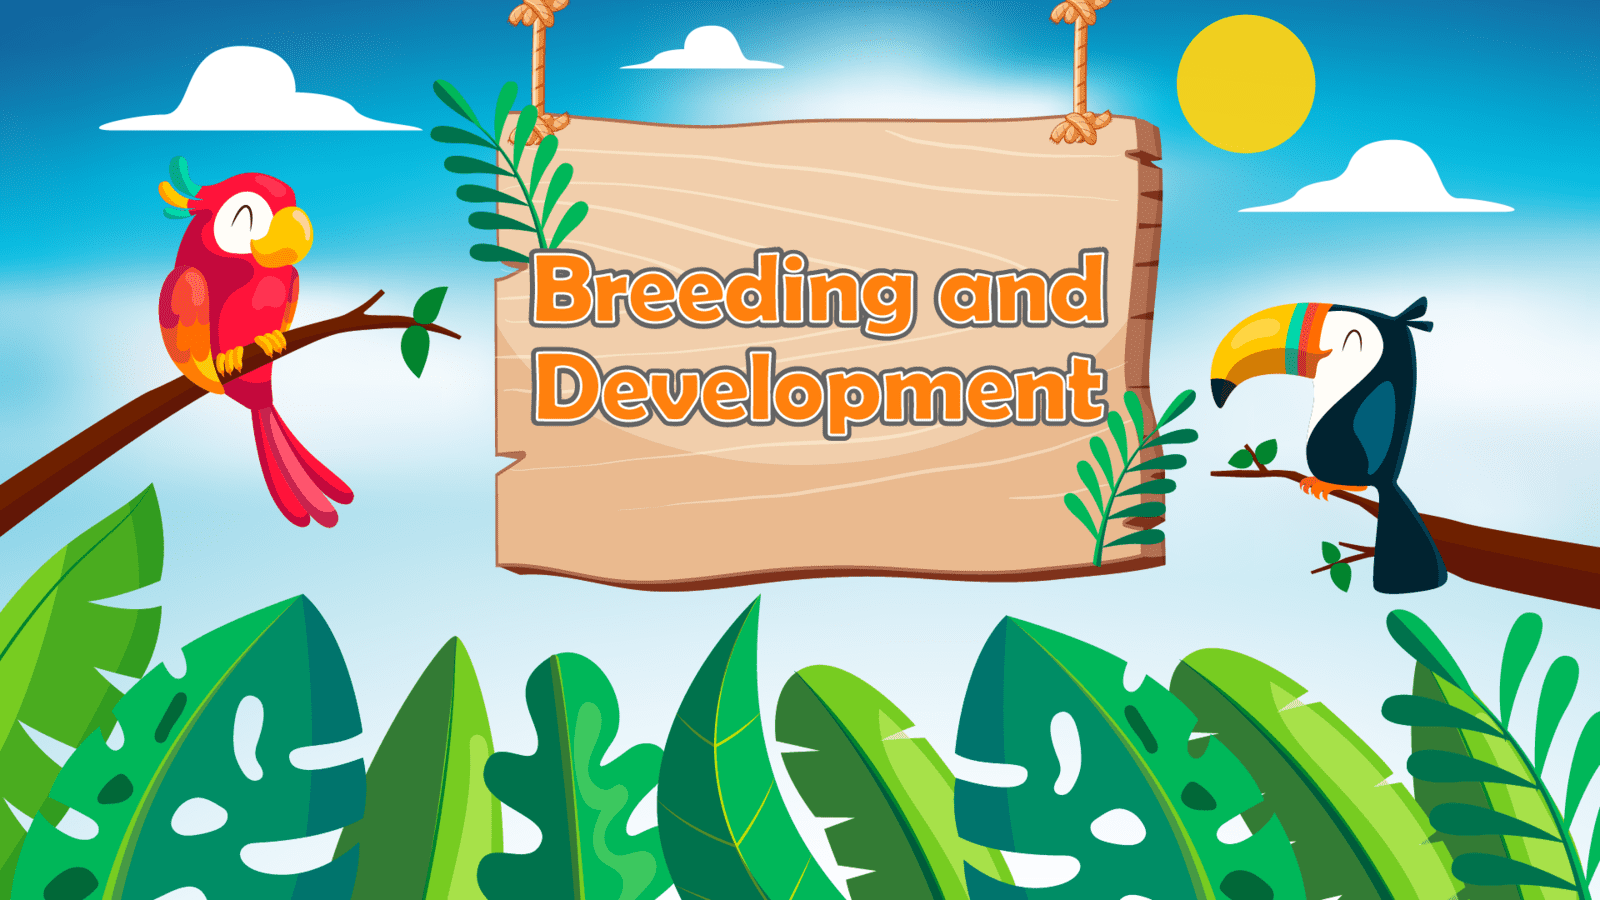 Breeding and Development LearningMole